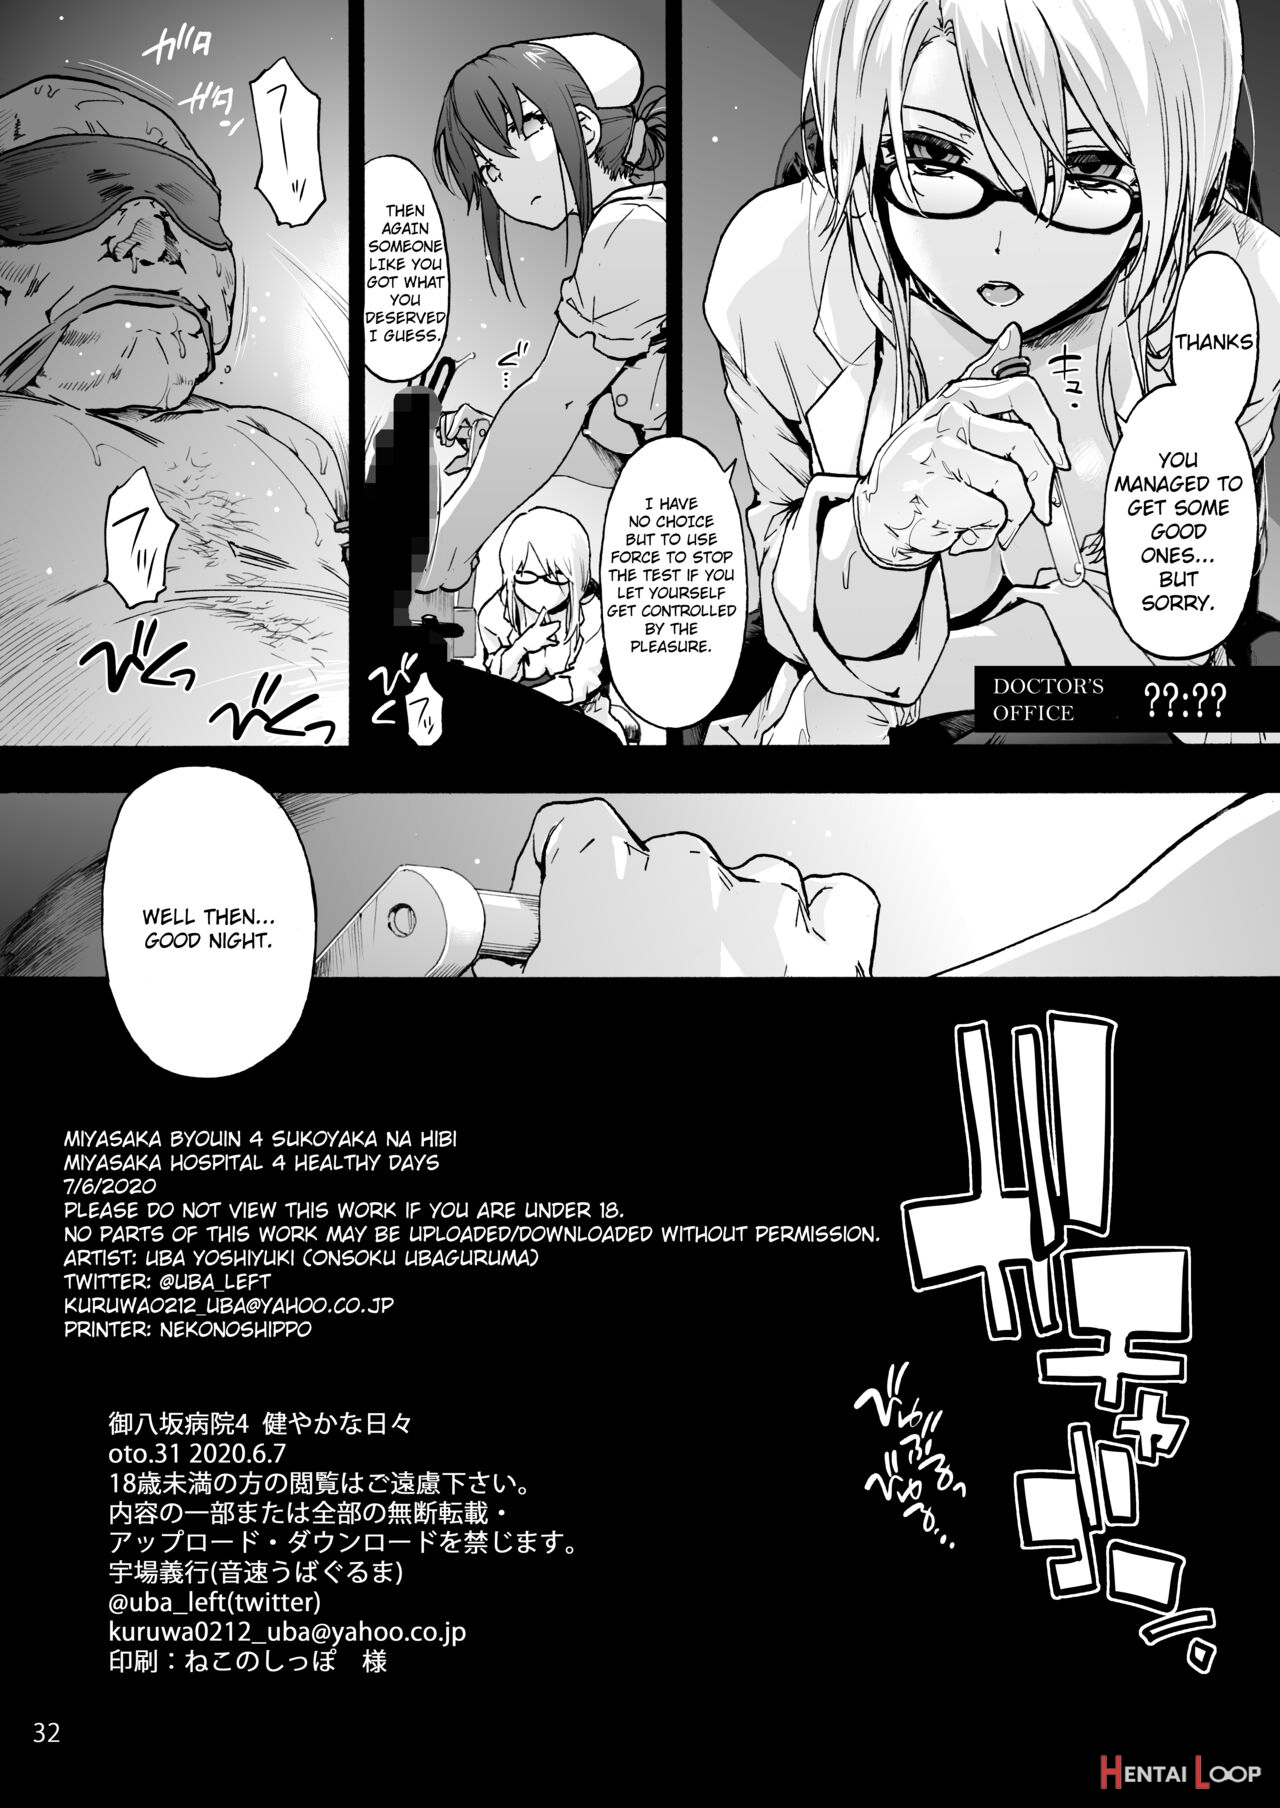 Miyasaka Hospital 4 Healthy Days page 34